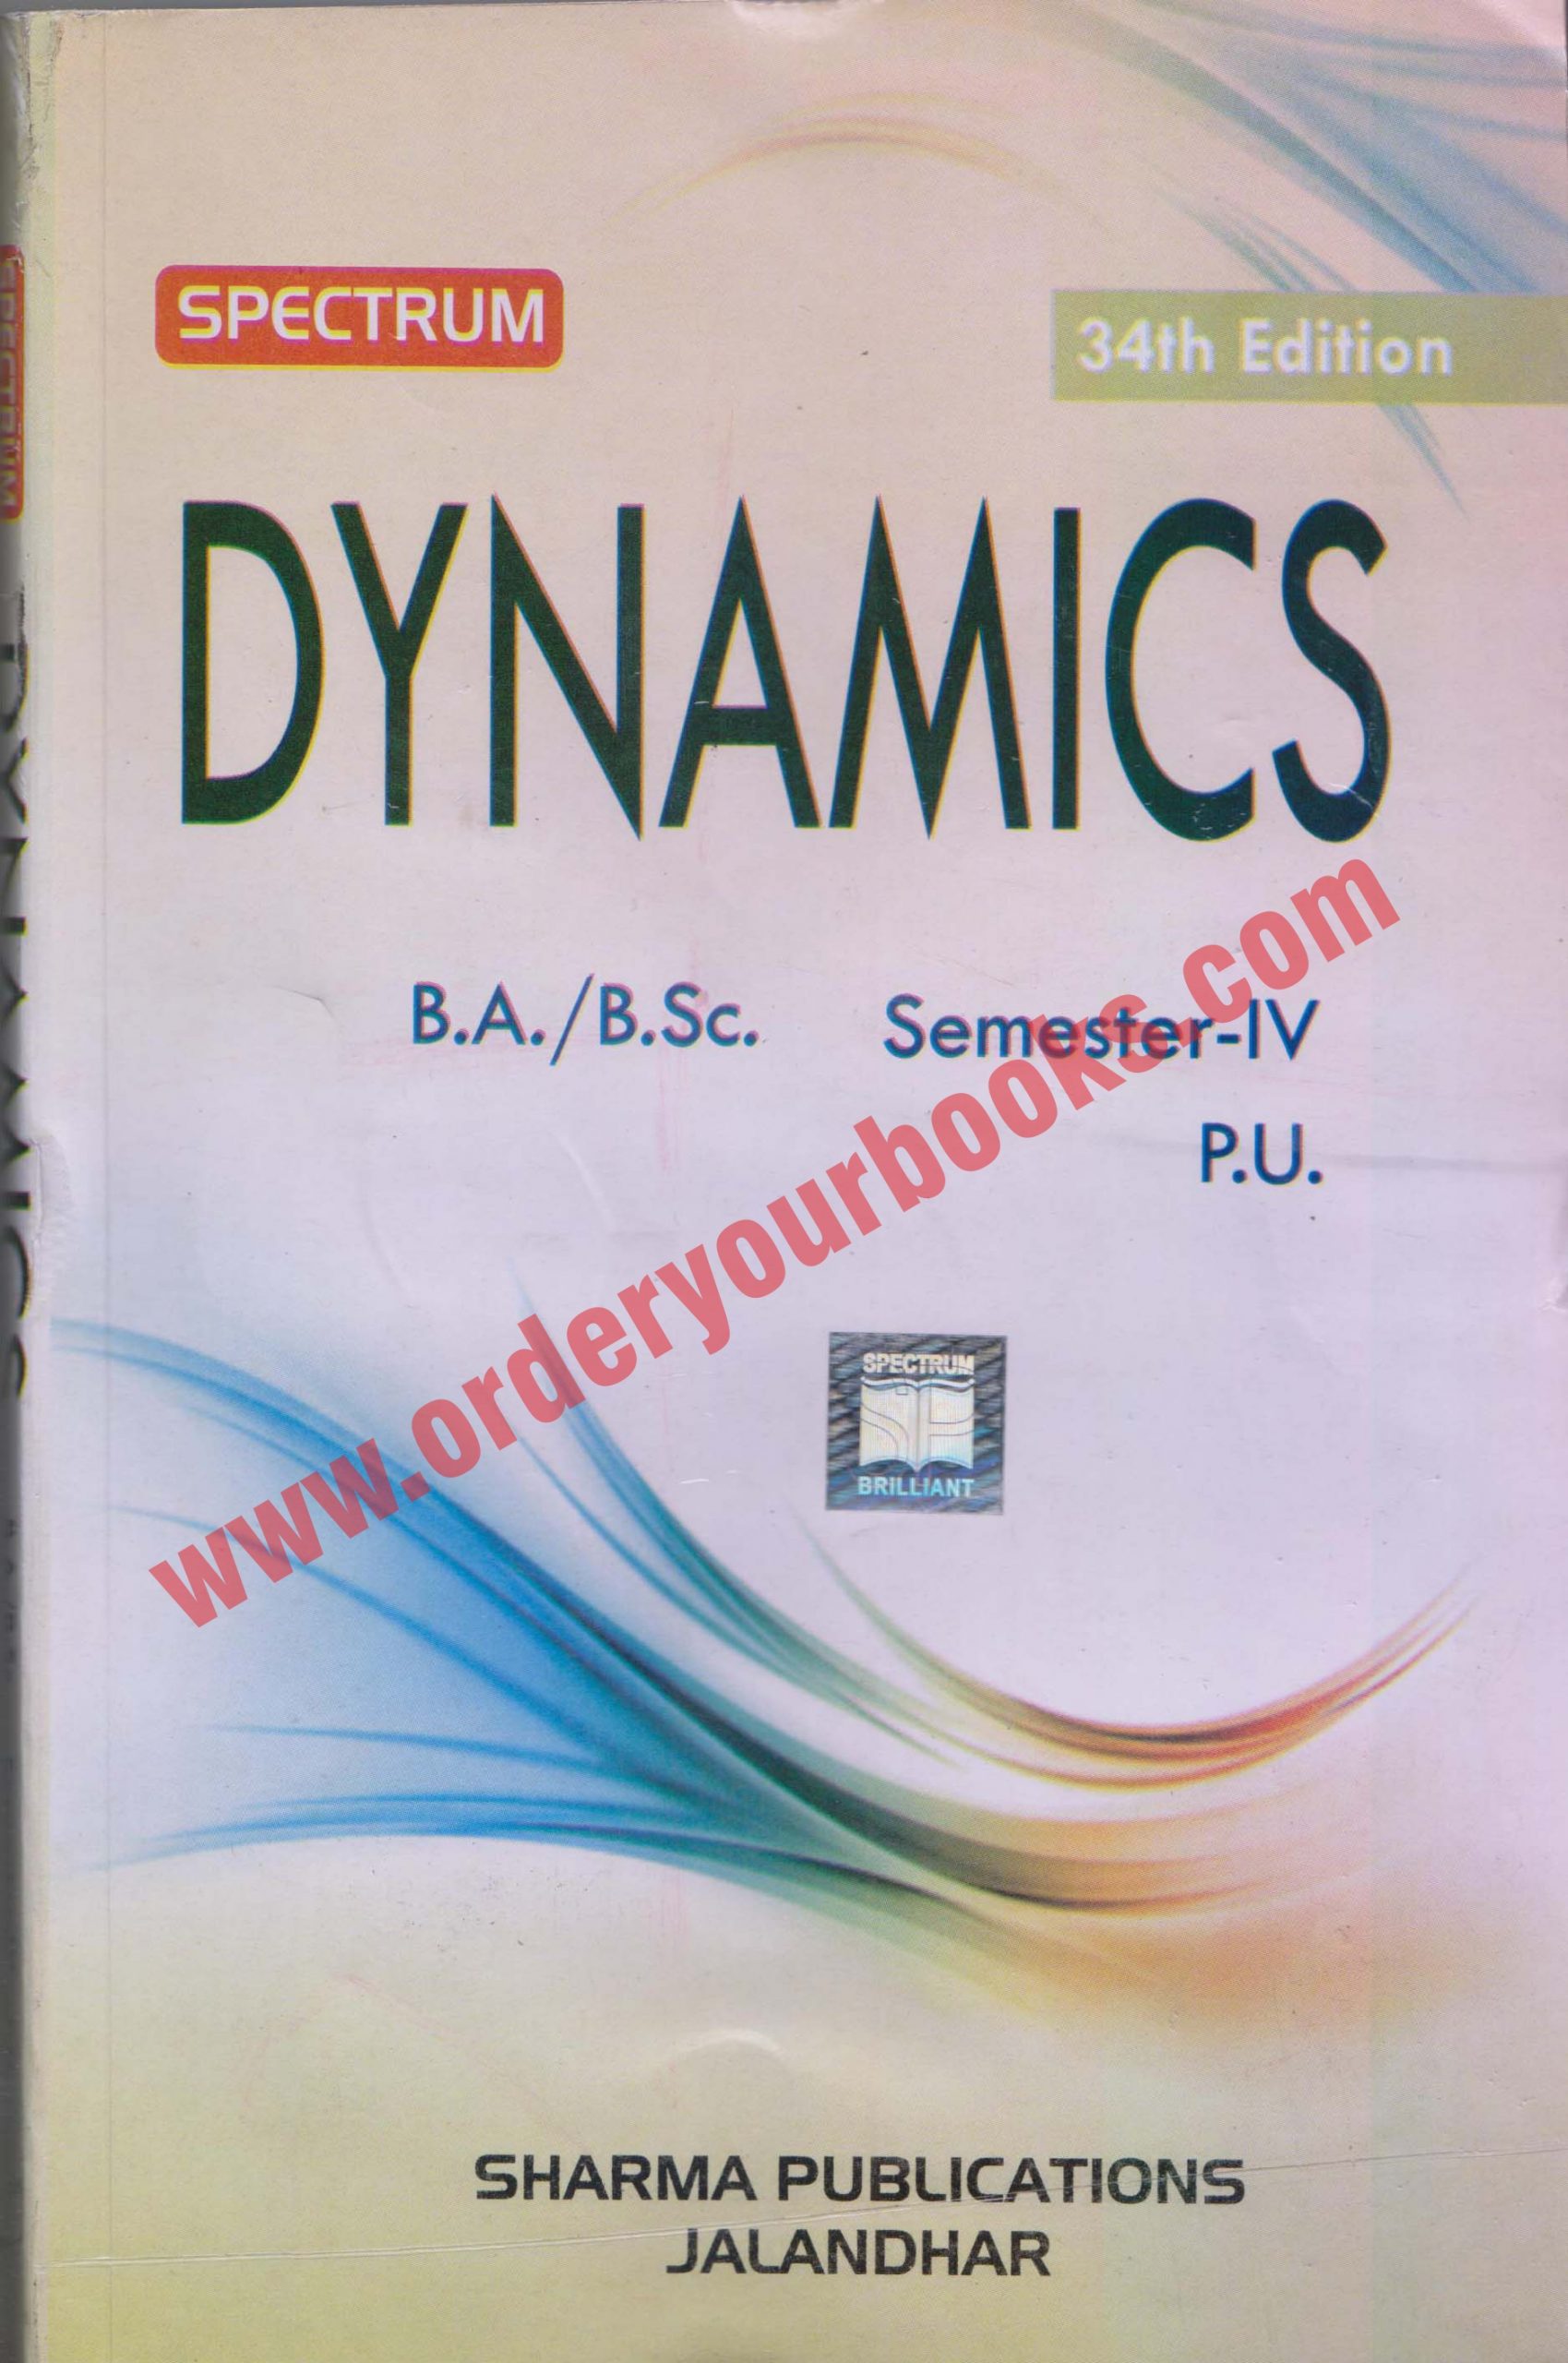 Spectrum Dynamics for B.A. / B.Sc. Semester 4 P.U. by Dr. Sharma